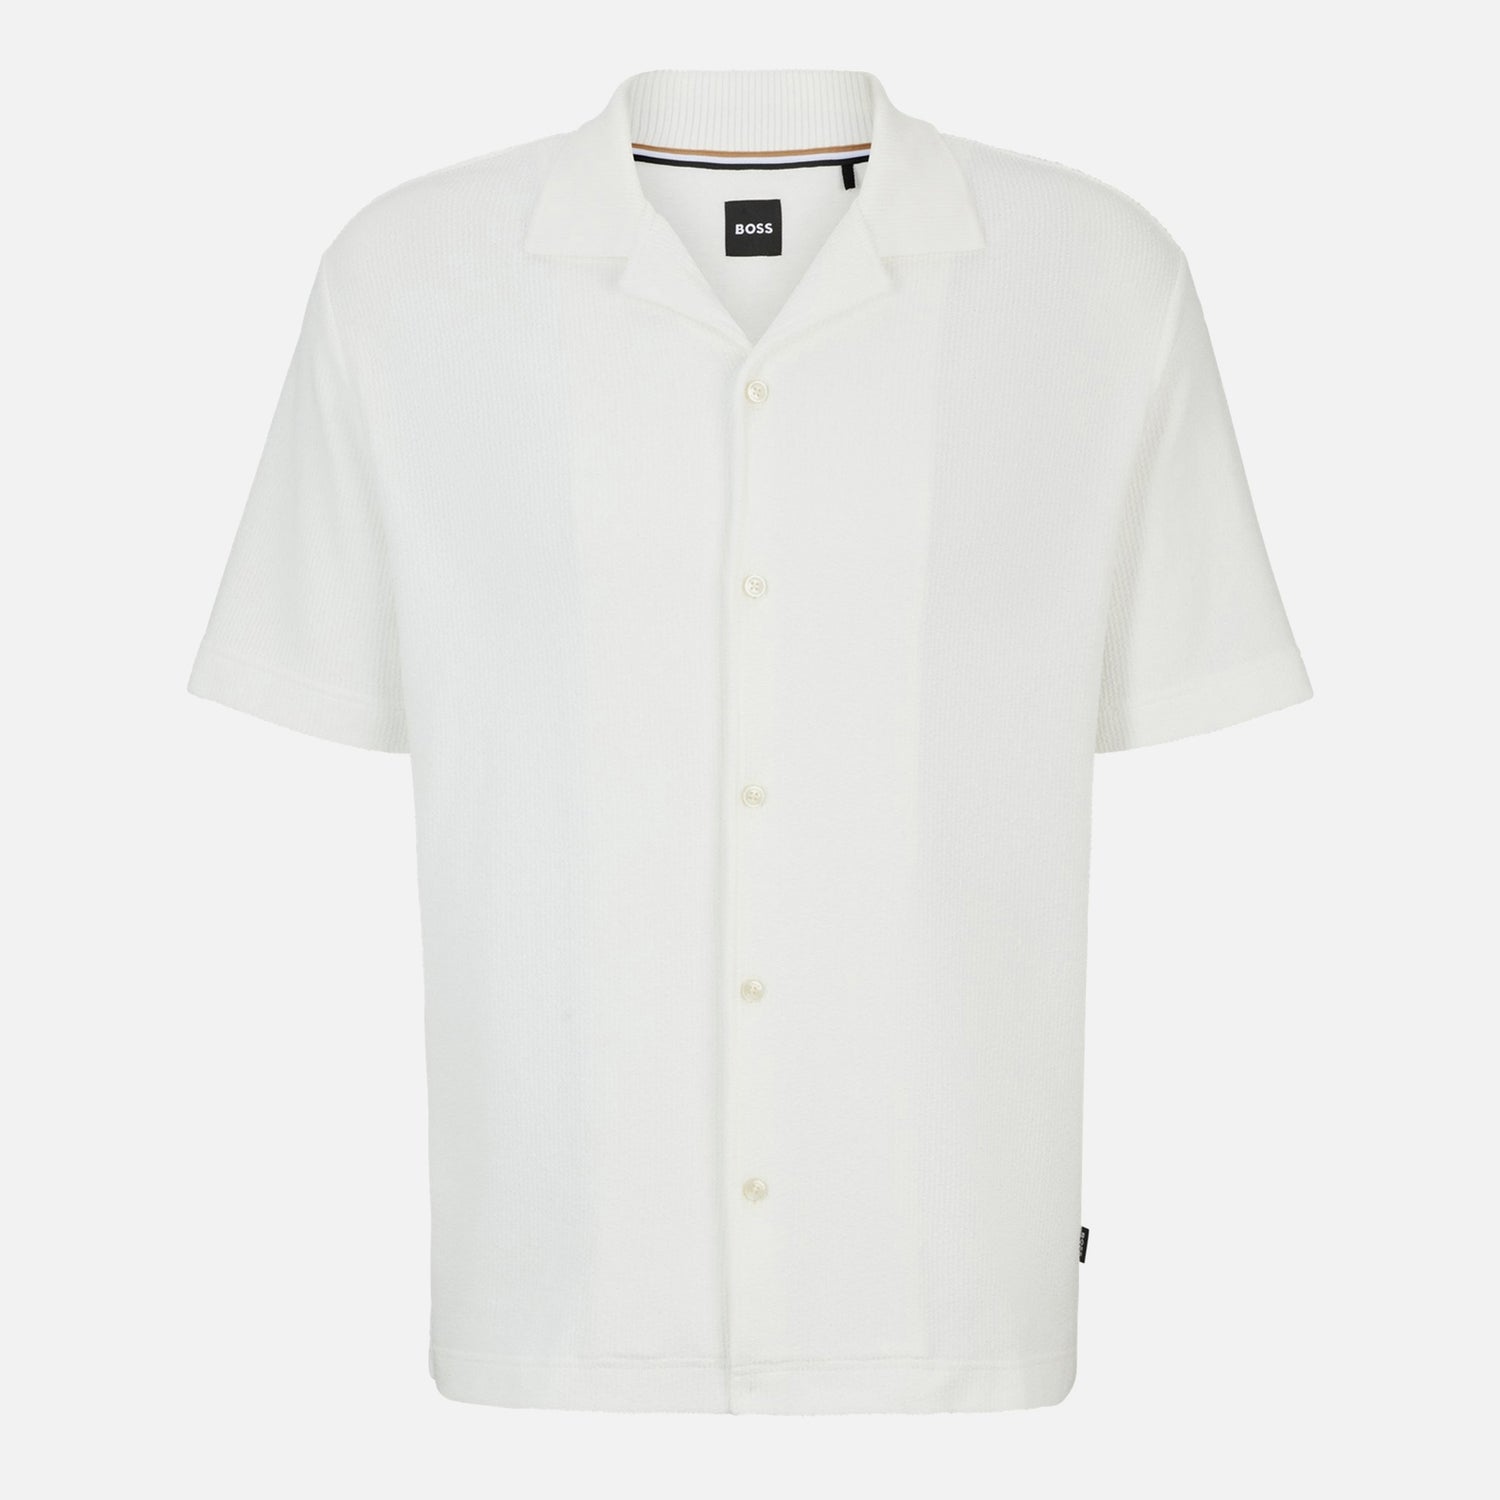 BOSS Black Powell Ribbed Cotton Shirt - S